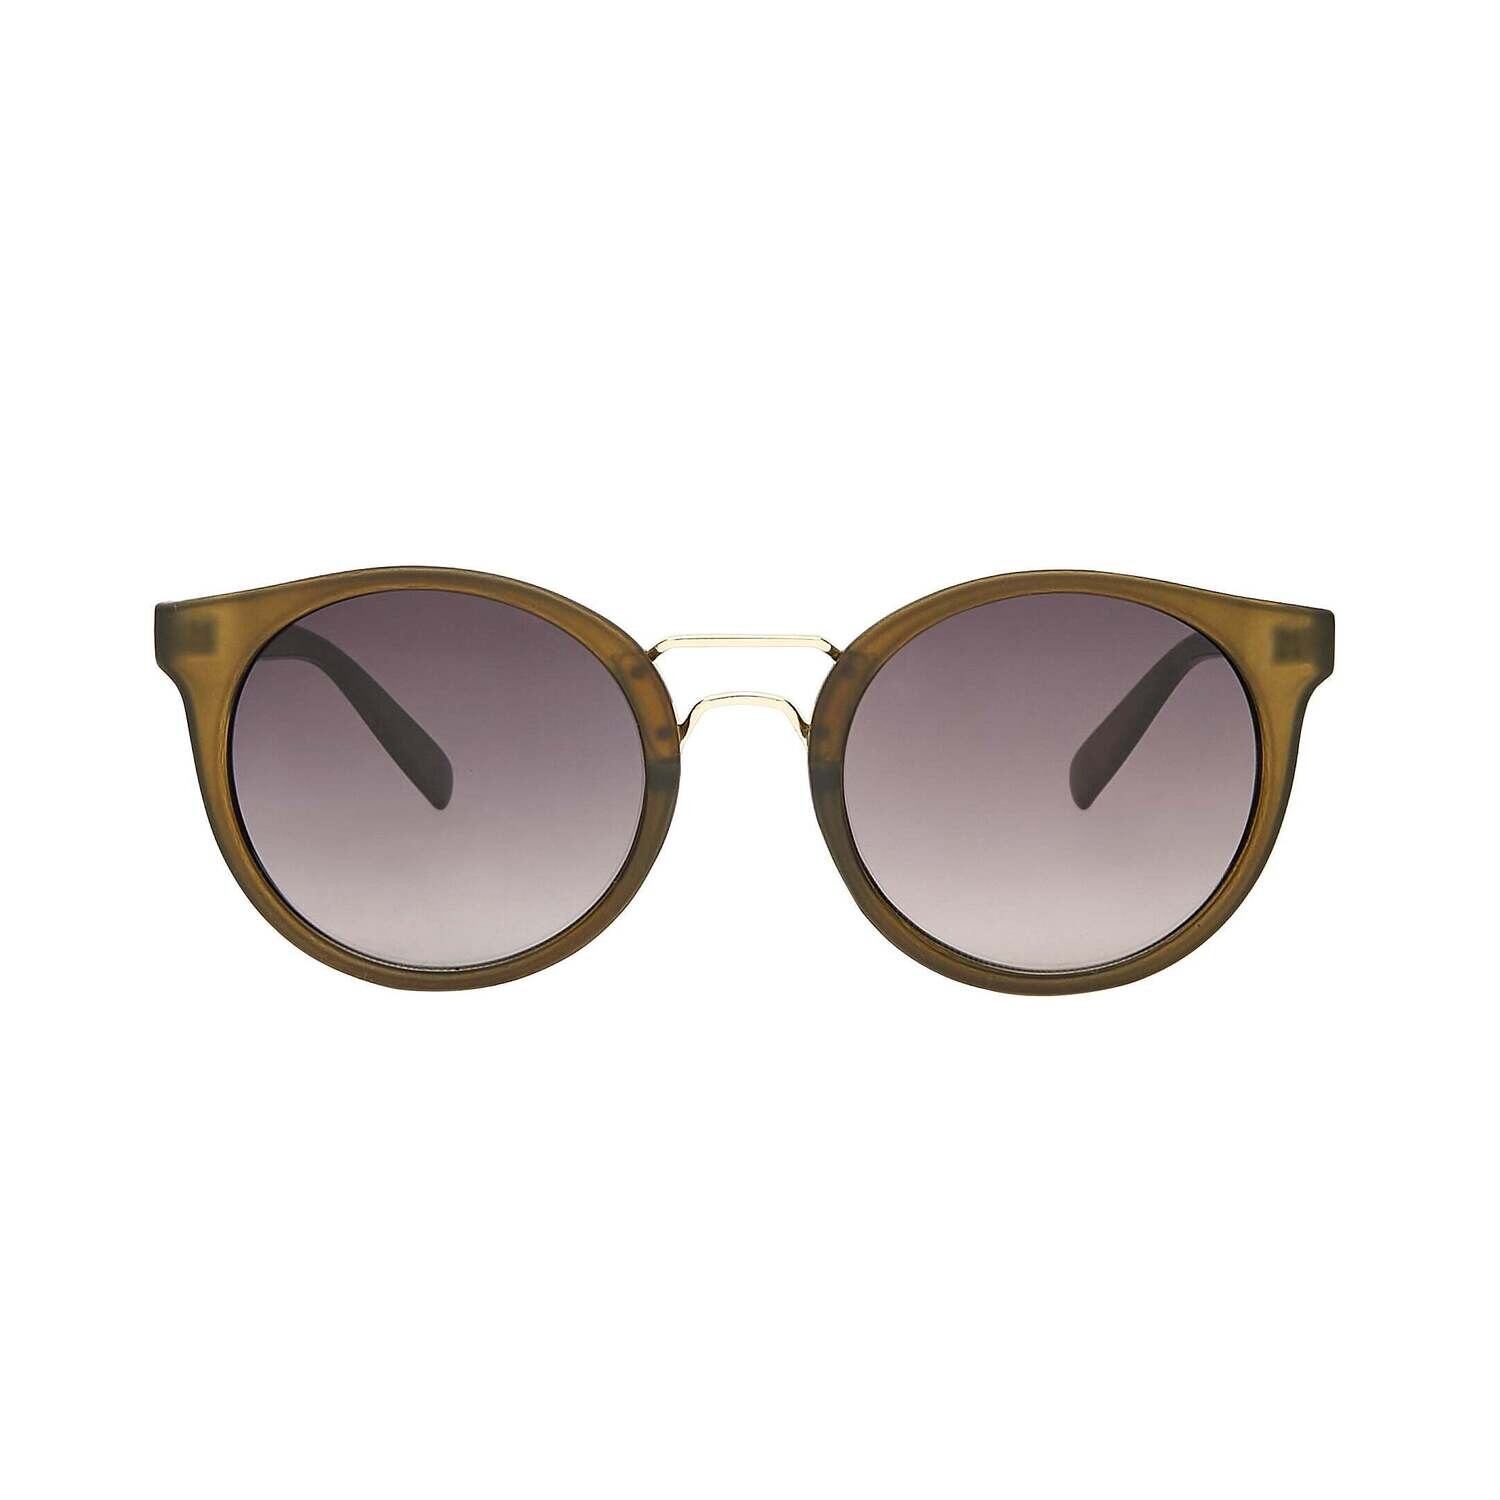 Слънчеви очила "Biella Olive"
Hart&Holm